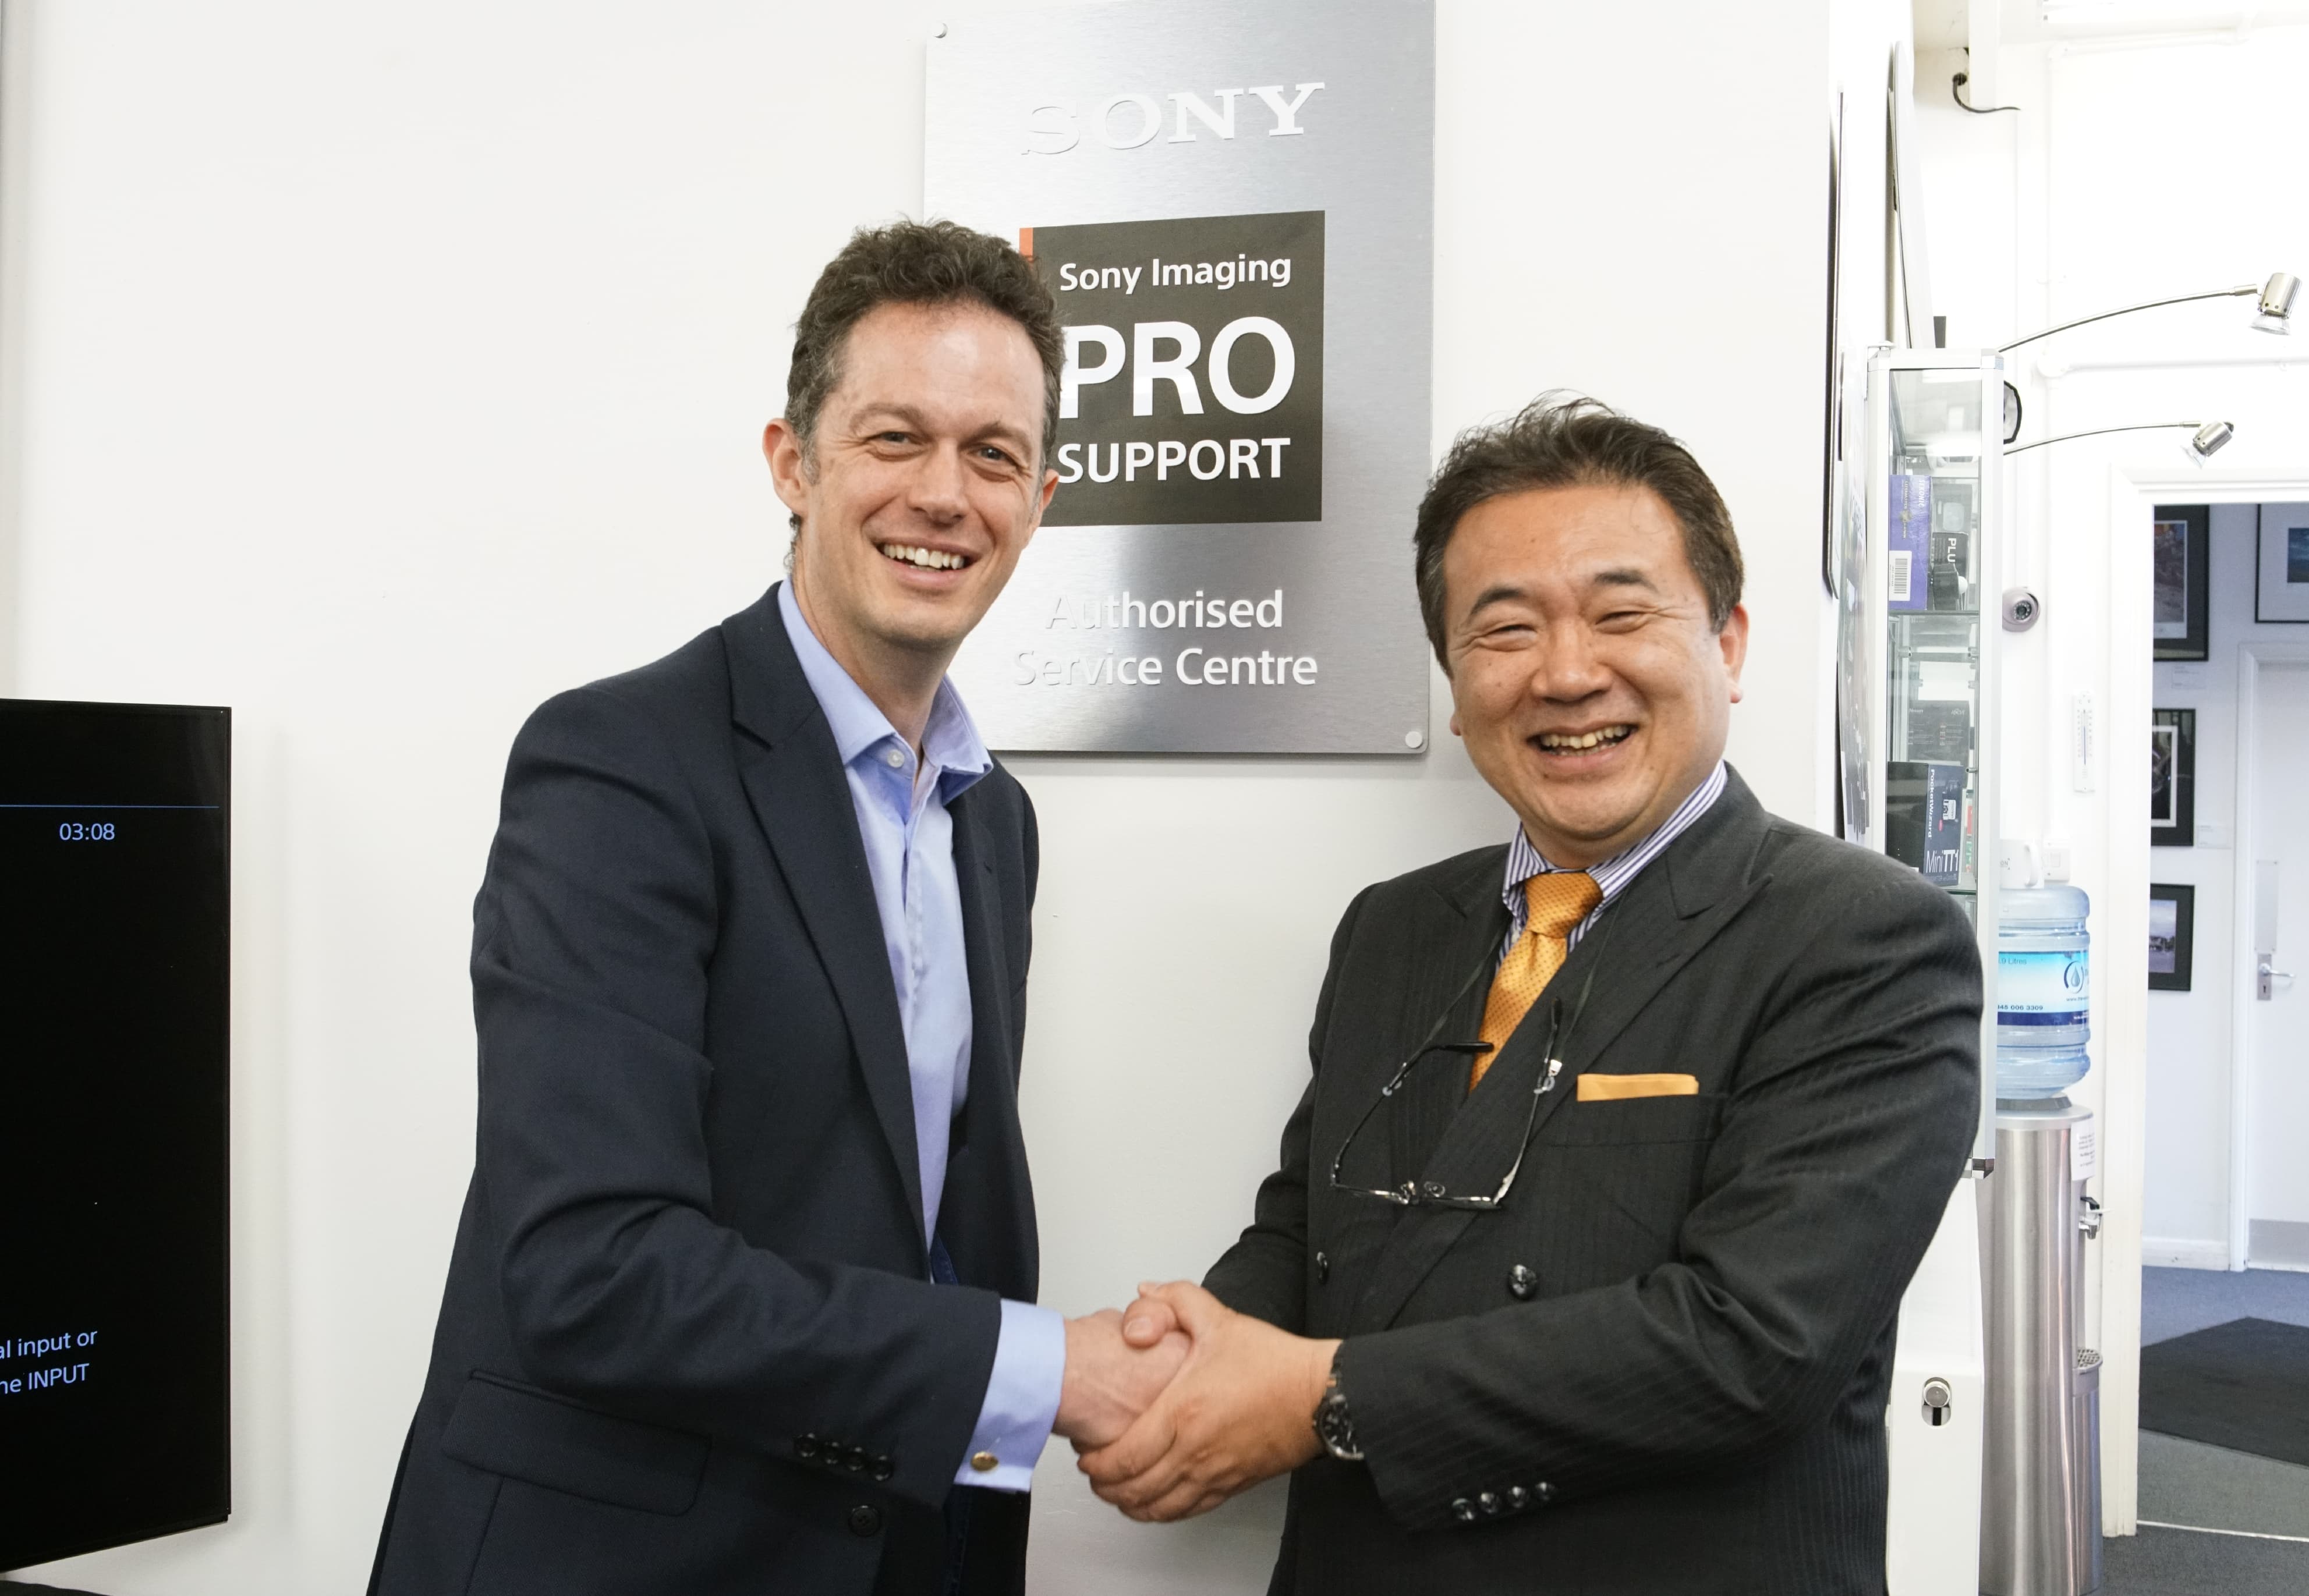 David Garratt and Yosuke Aoki shaking hands at new Sony Imaging Pro Support Centre 